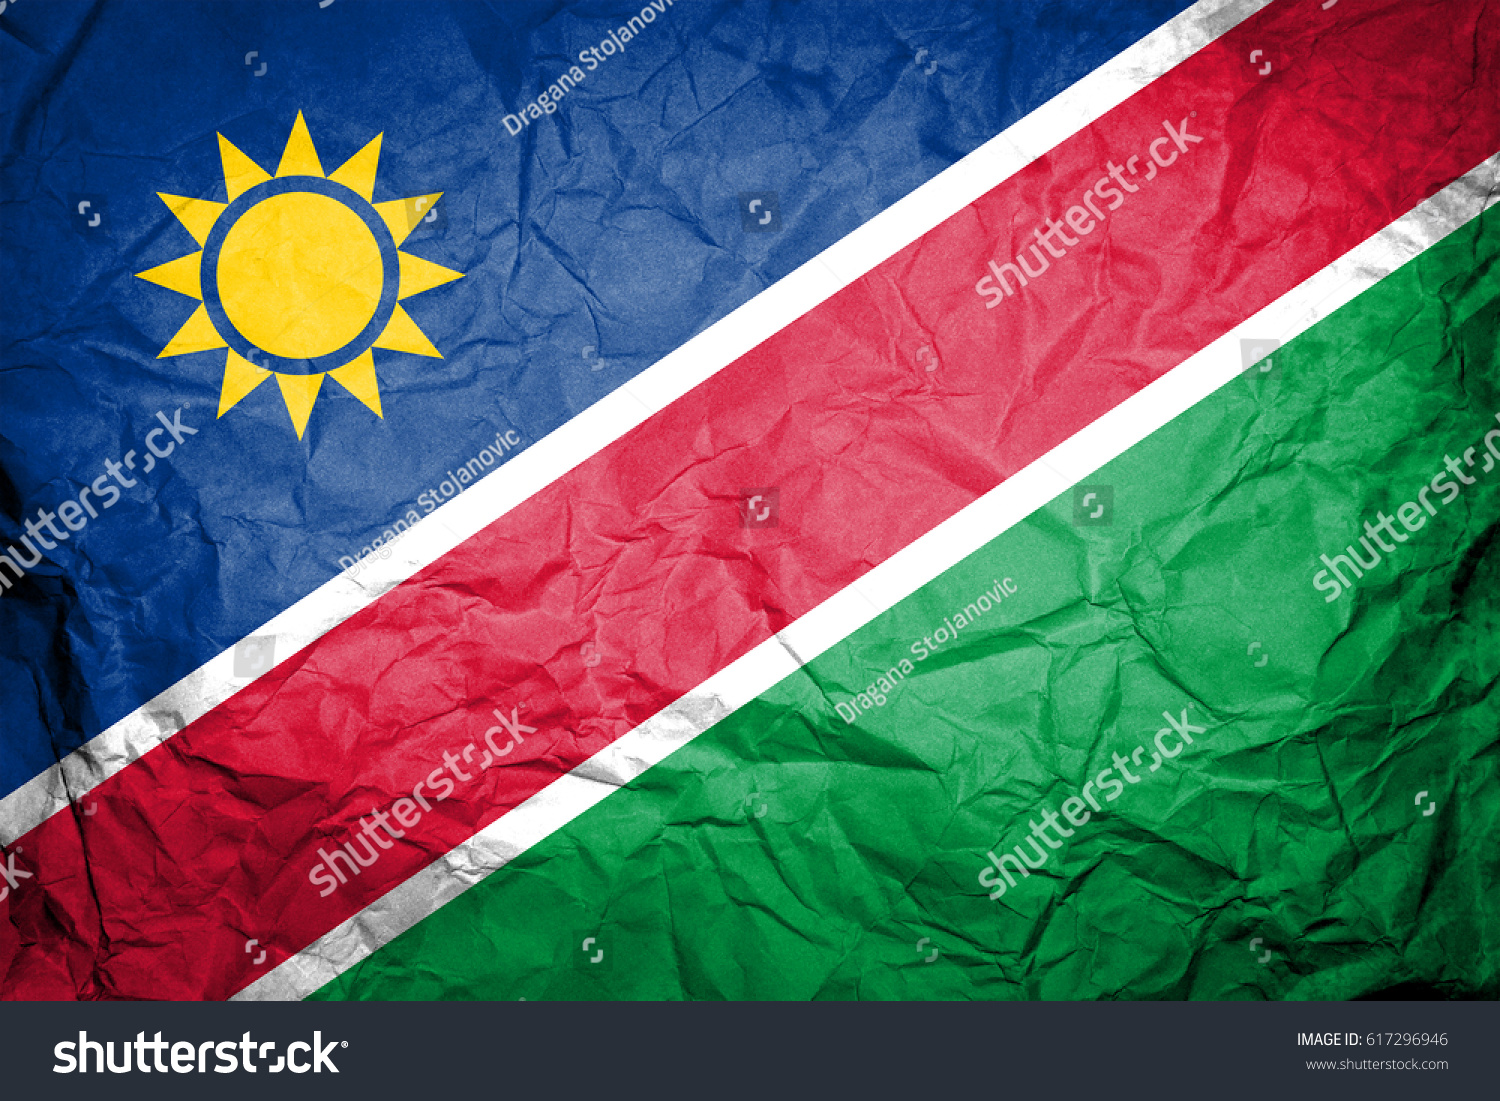 Flag of Namibia #617296946